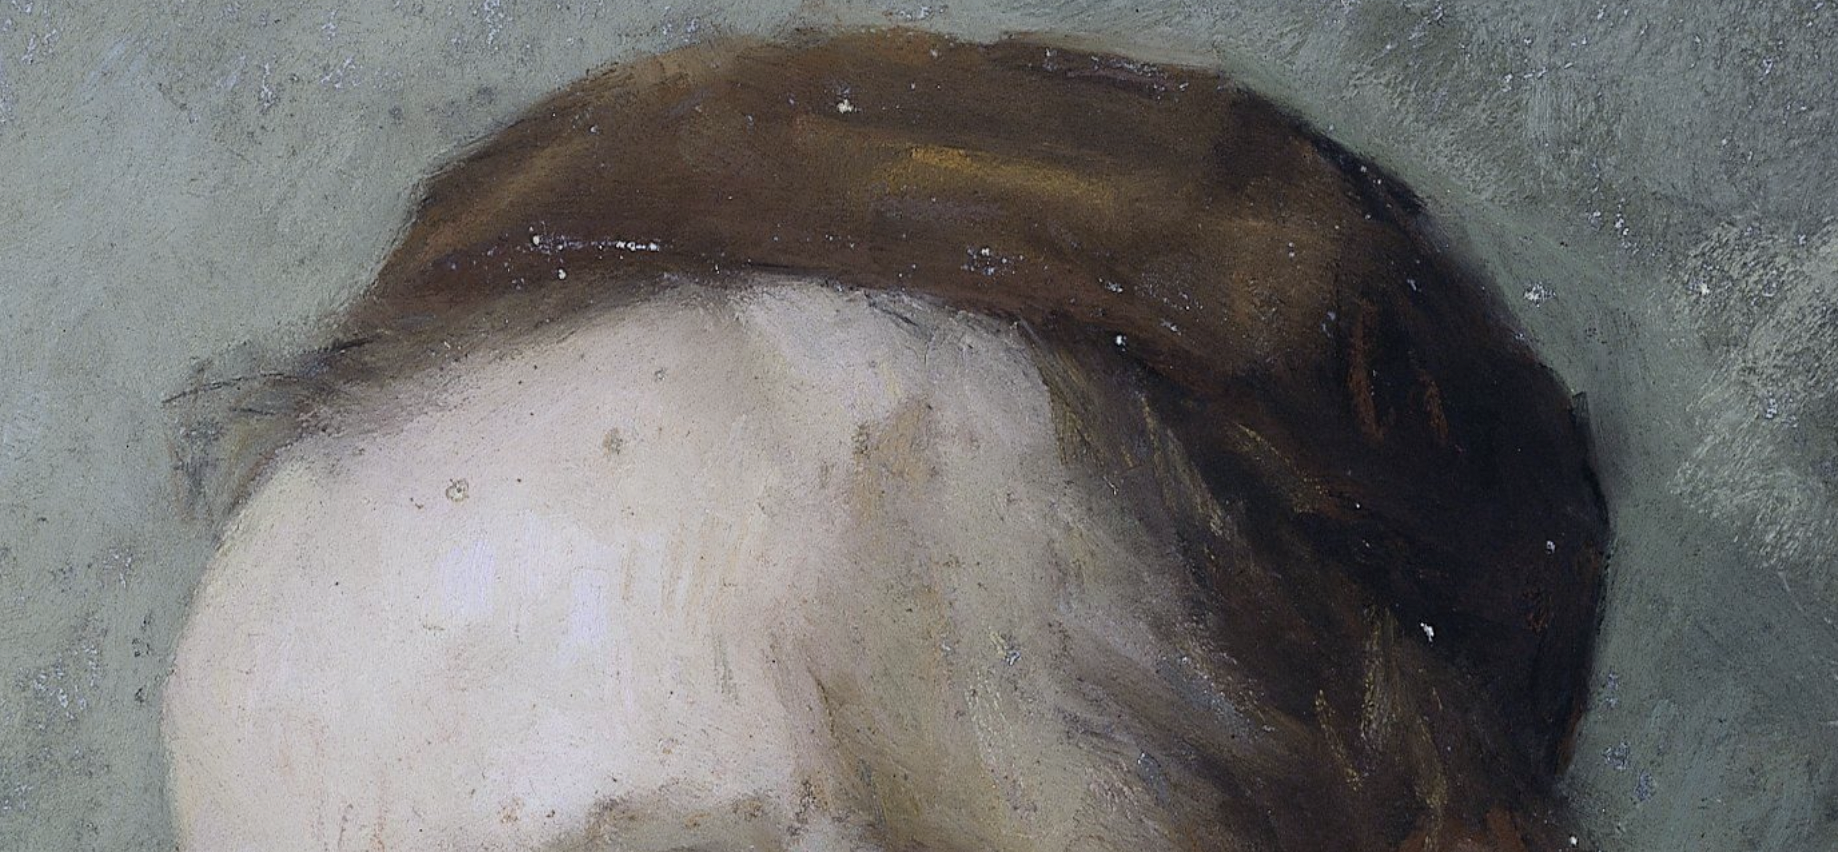 Thérèse Schwartze, “Portrait of Paul Joseph Constantin Gabriël,” 1899, pastel on paper, 76 x 46 cm (29 7/8 x 18 1/8 in), Rijksmuseum, Amsterdam. Detail - hair and cap